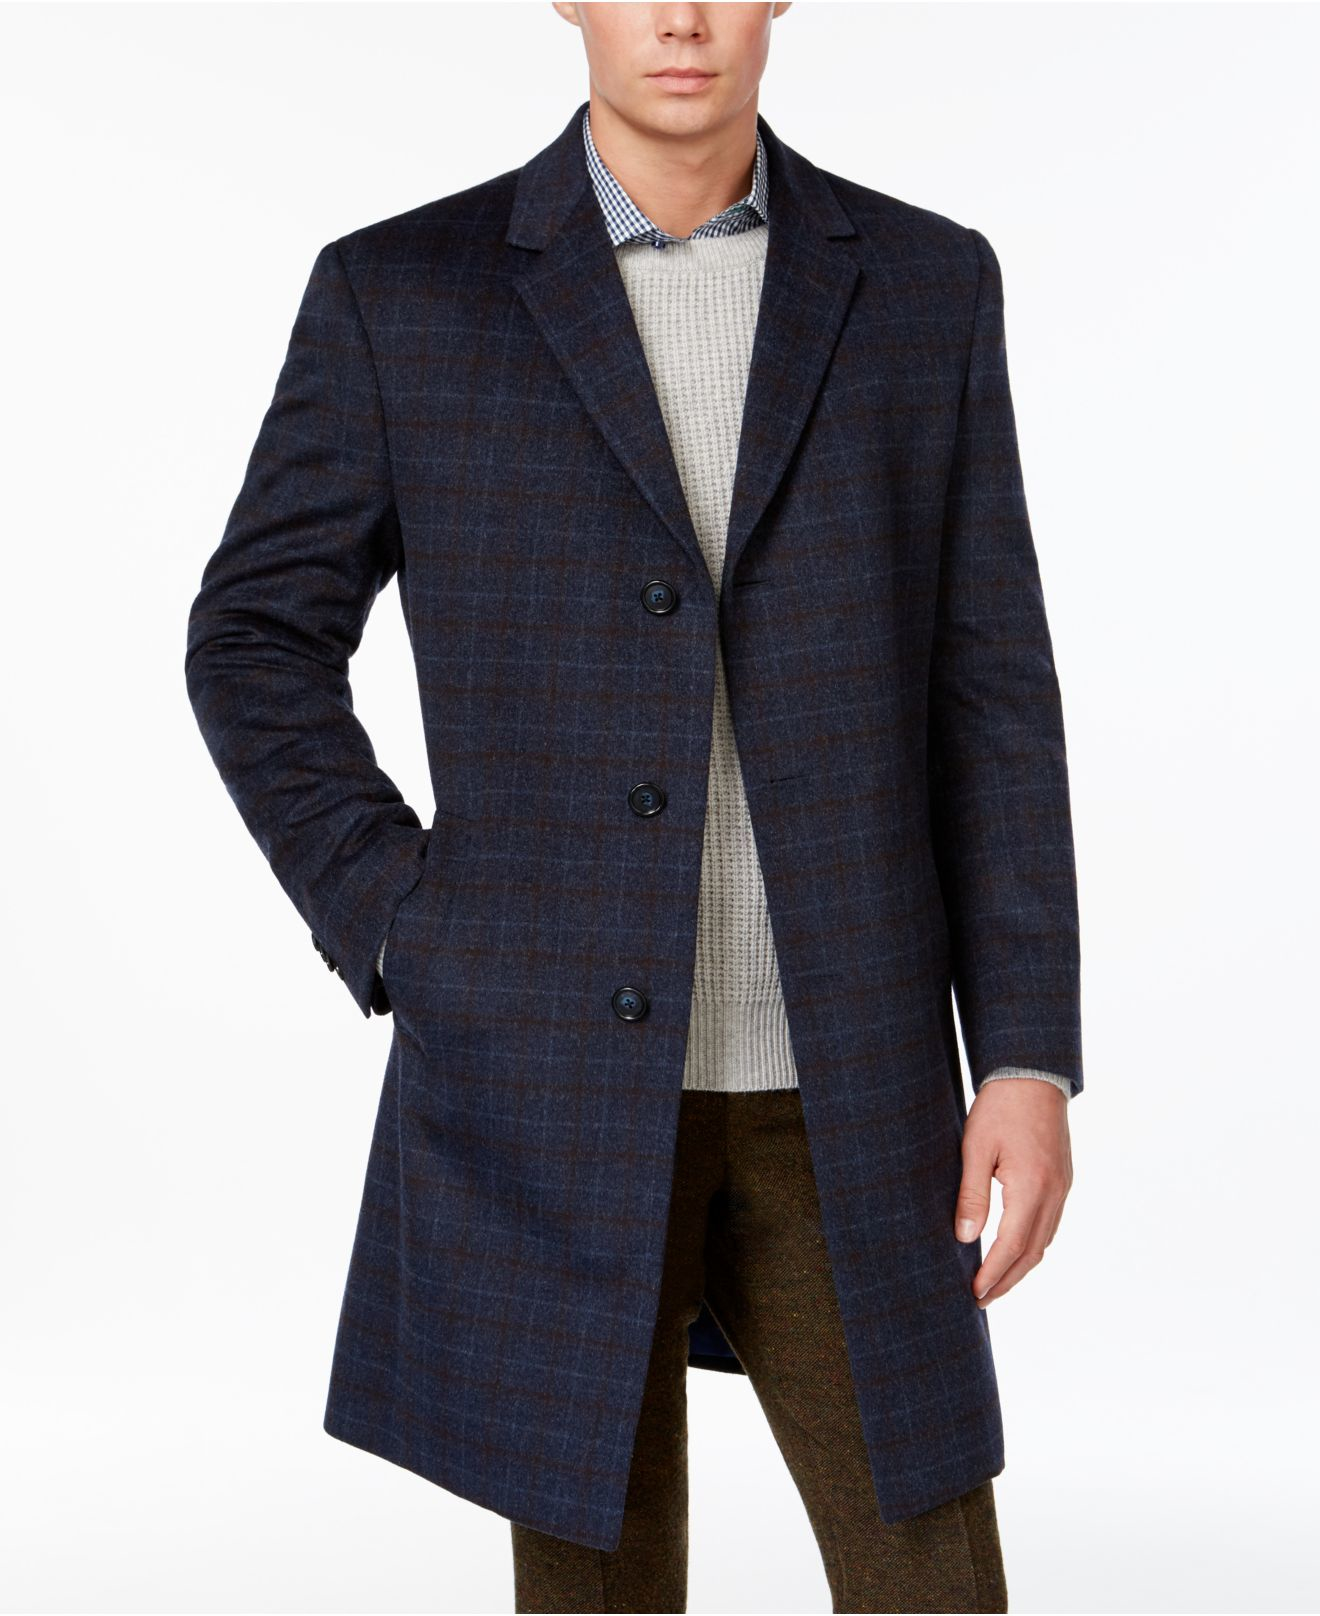 Lyst - Tommy Hilfiger Barnes Slim-fit Overcoat in Blue for Men